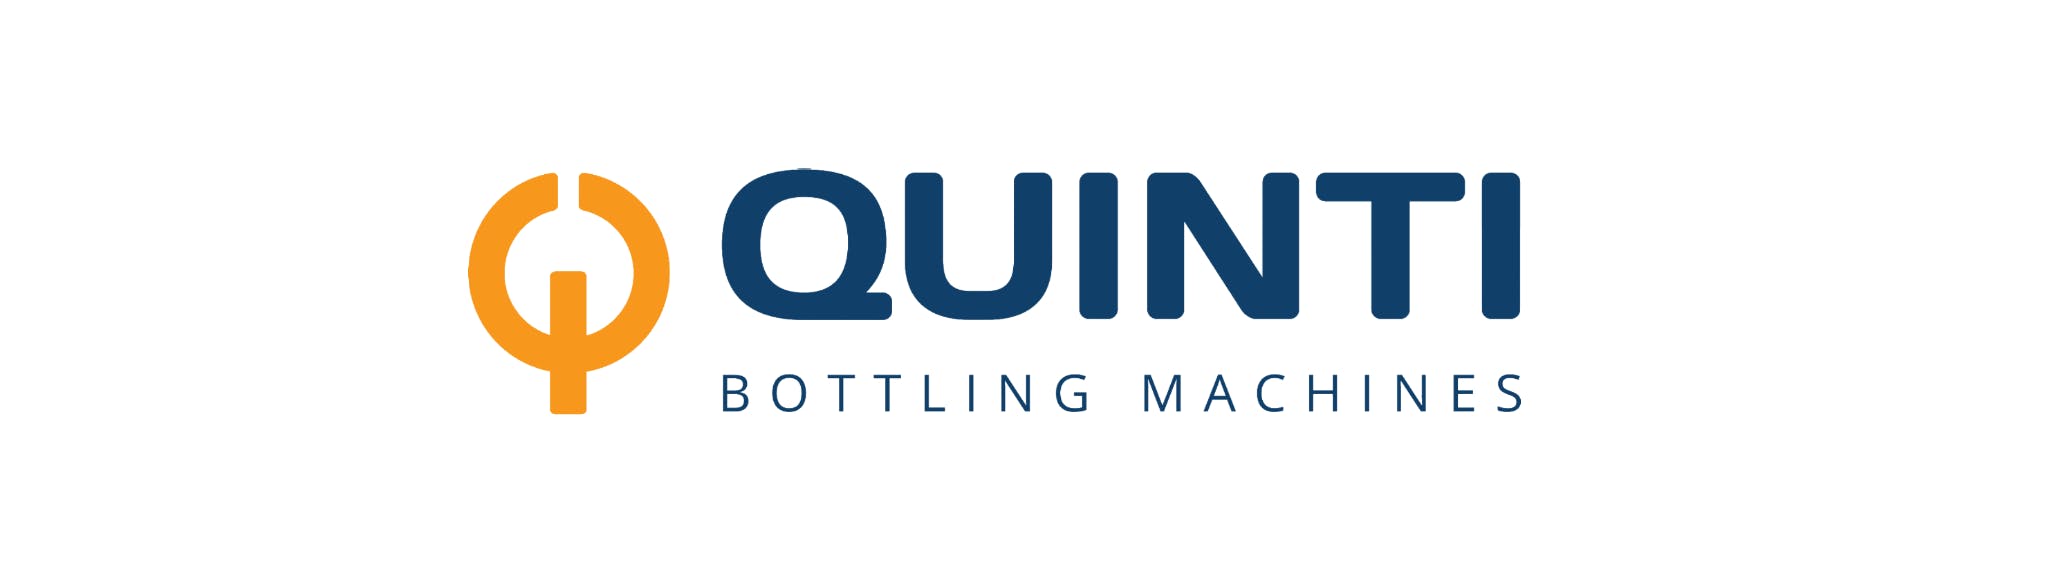 LOGO QUINTI BOTTLING MACHINES